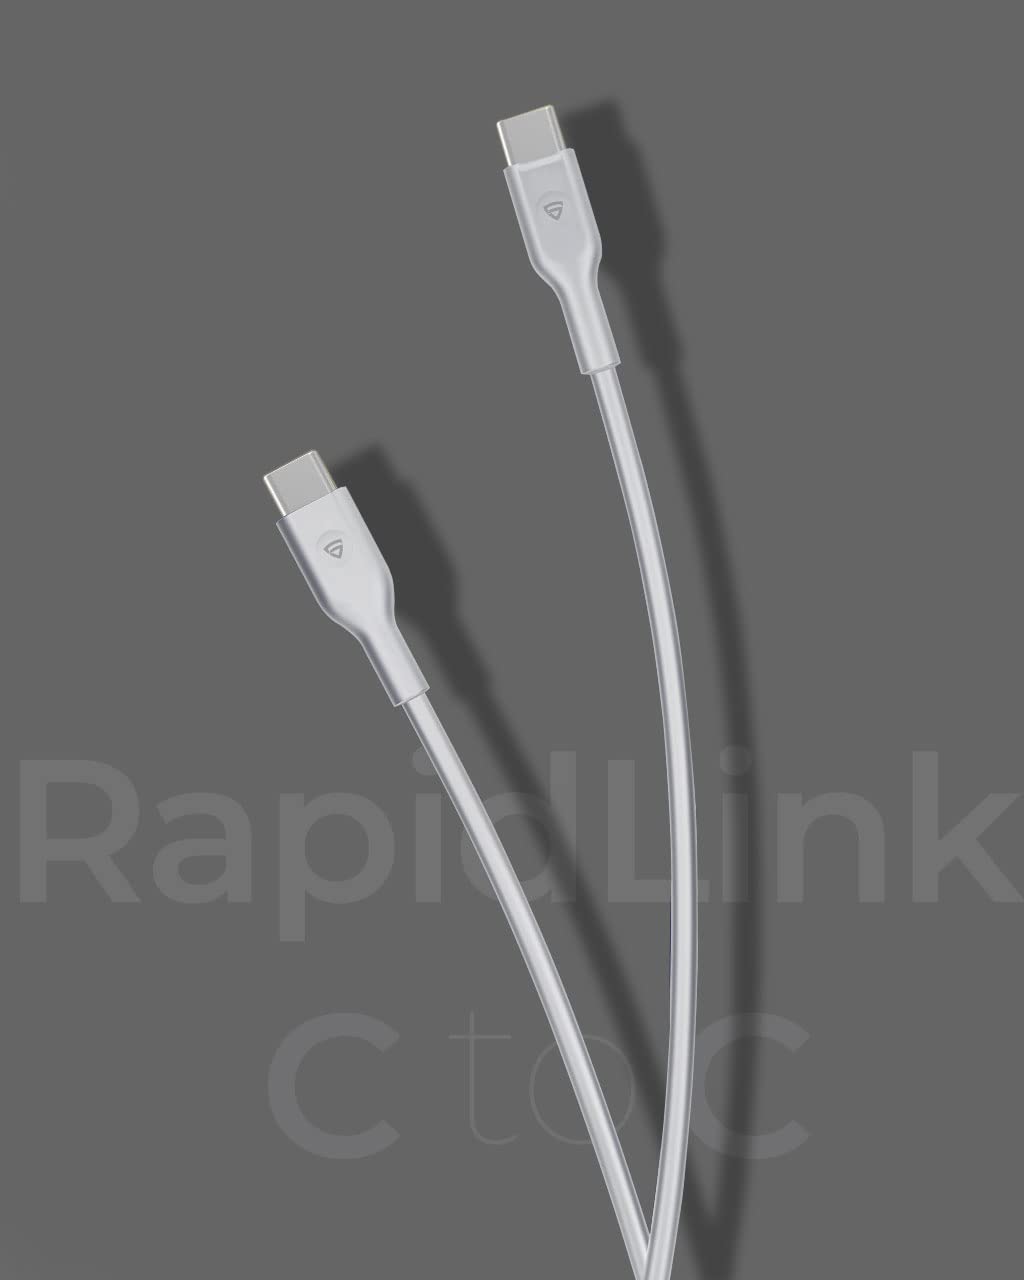 RAEGR RapidLink 400 USB+C Type Car Charger with 20W PD & 18W QC 3.0 Du –  Raegr